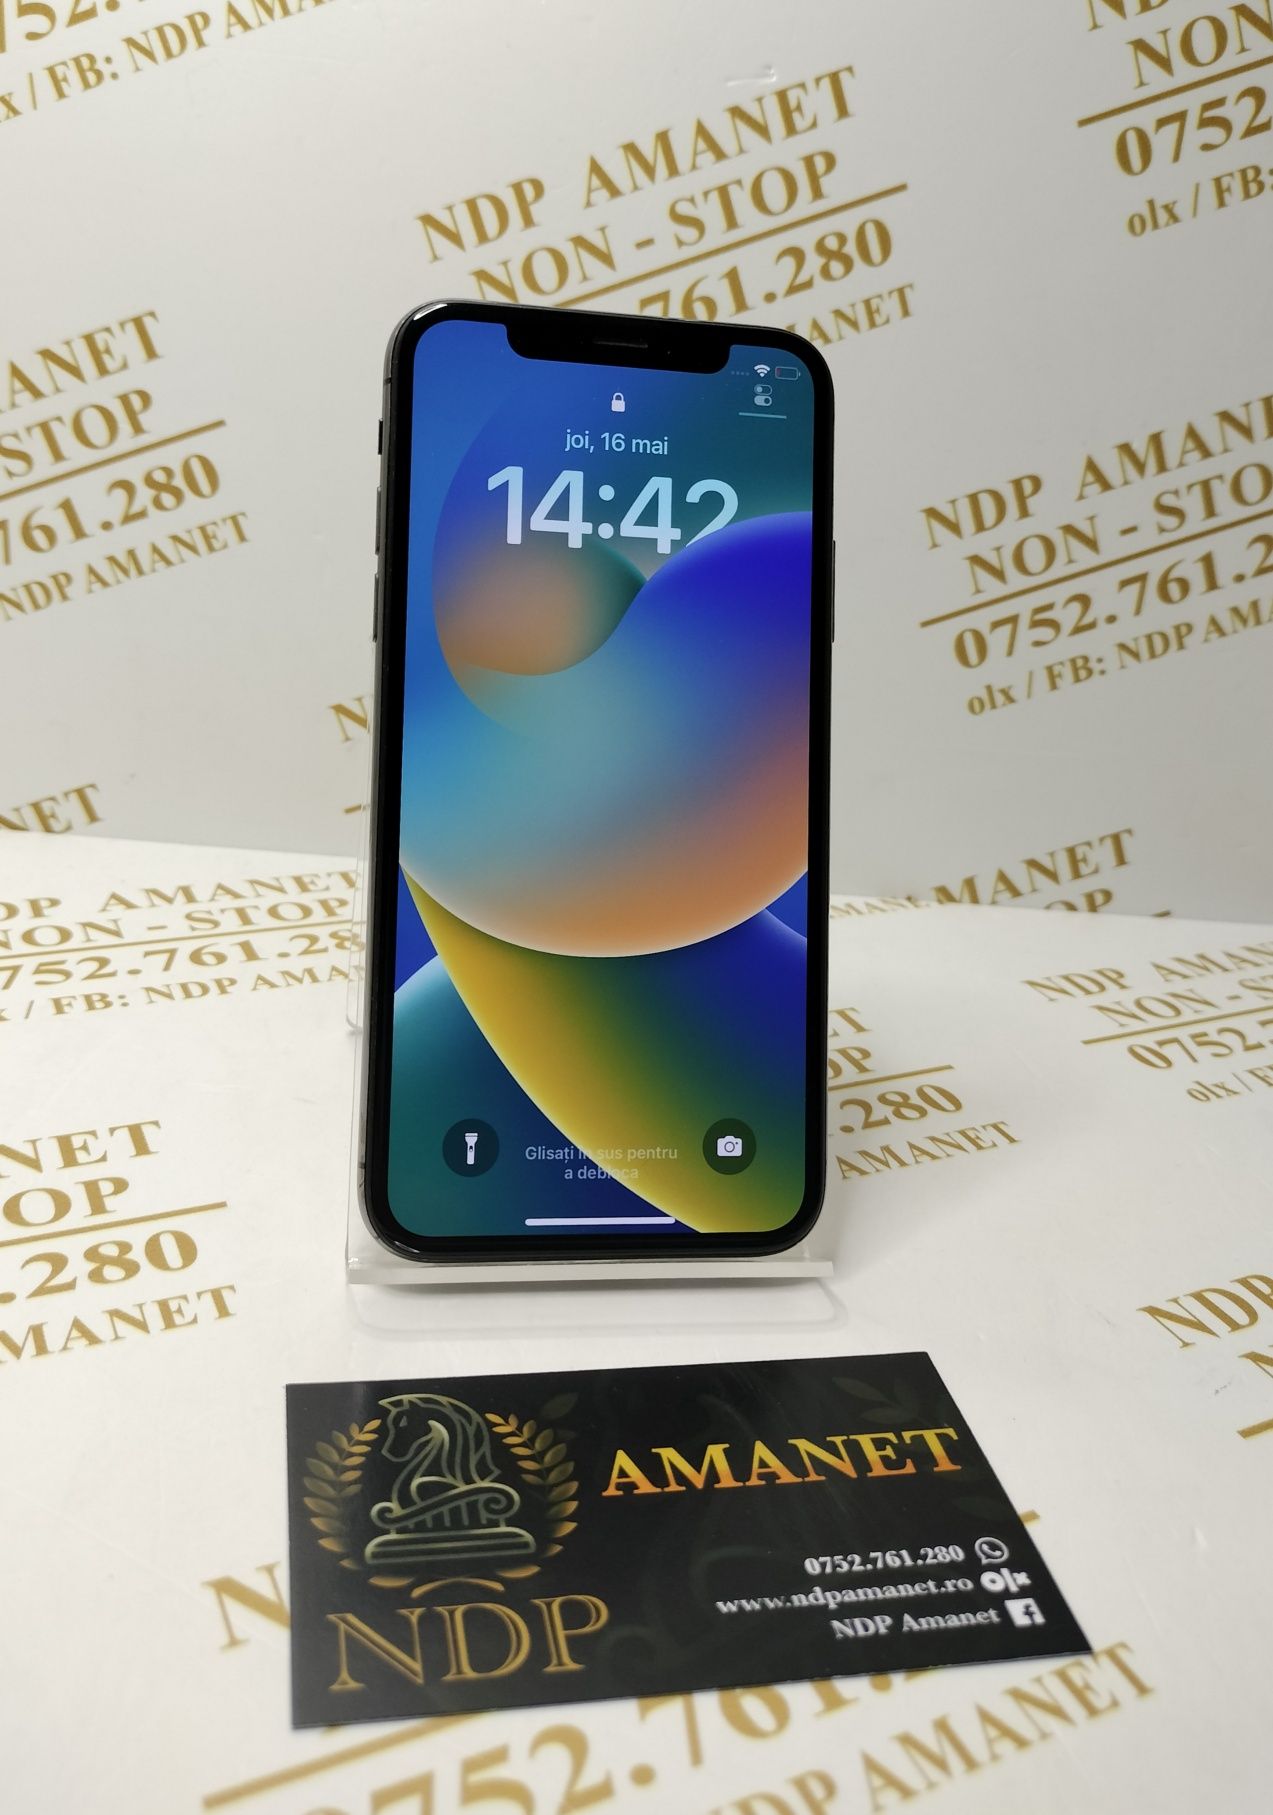 NDP Amanet Brăila iPhone X (1389)